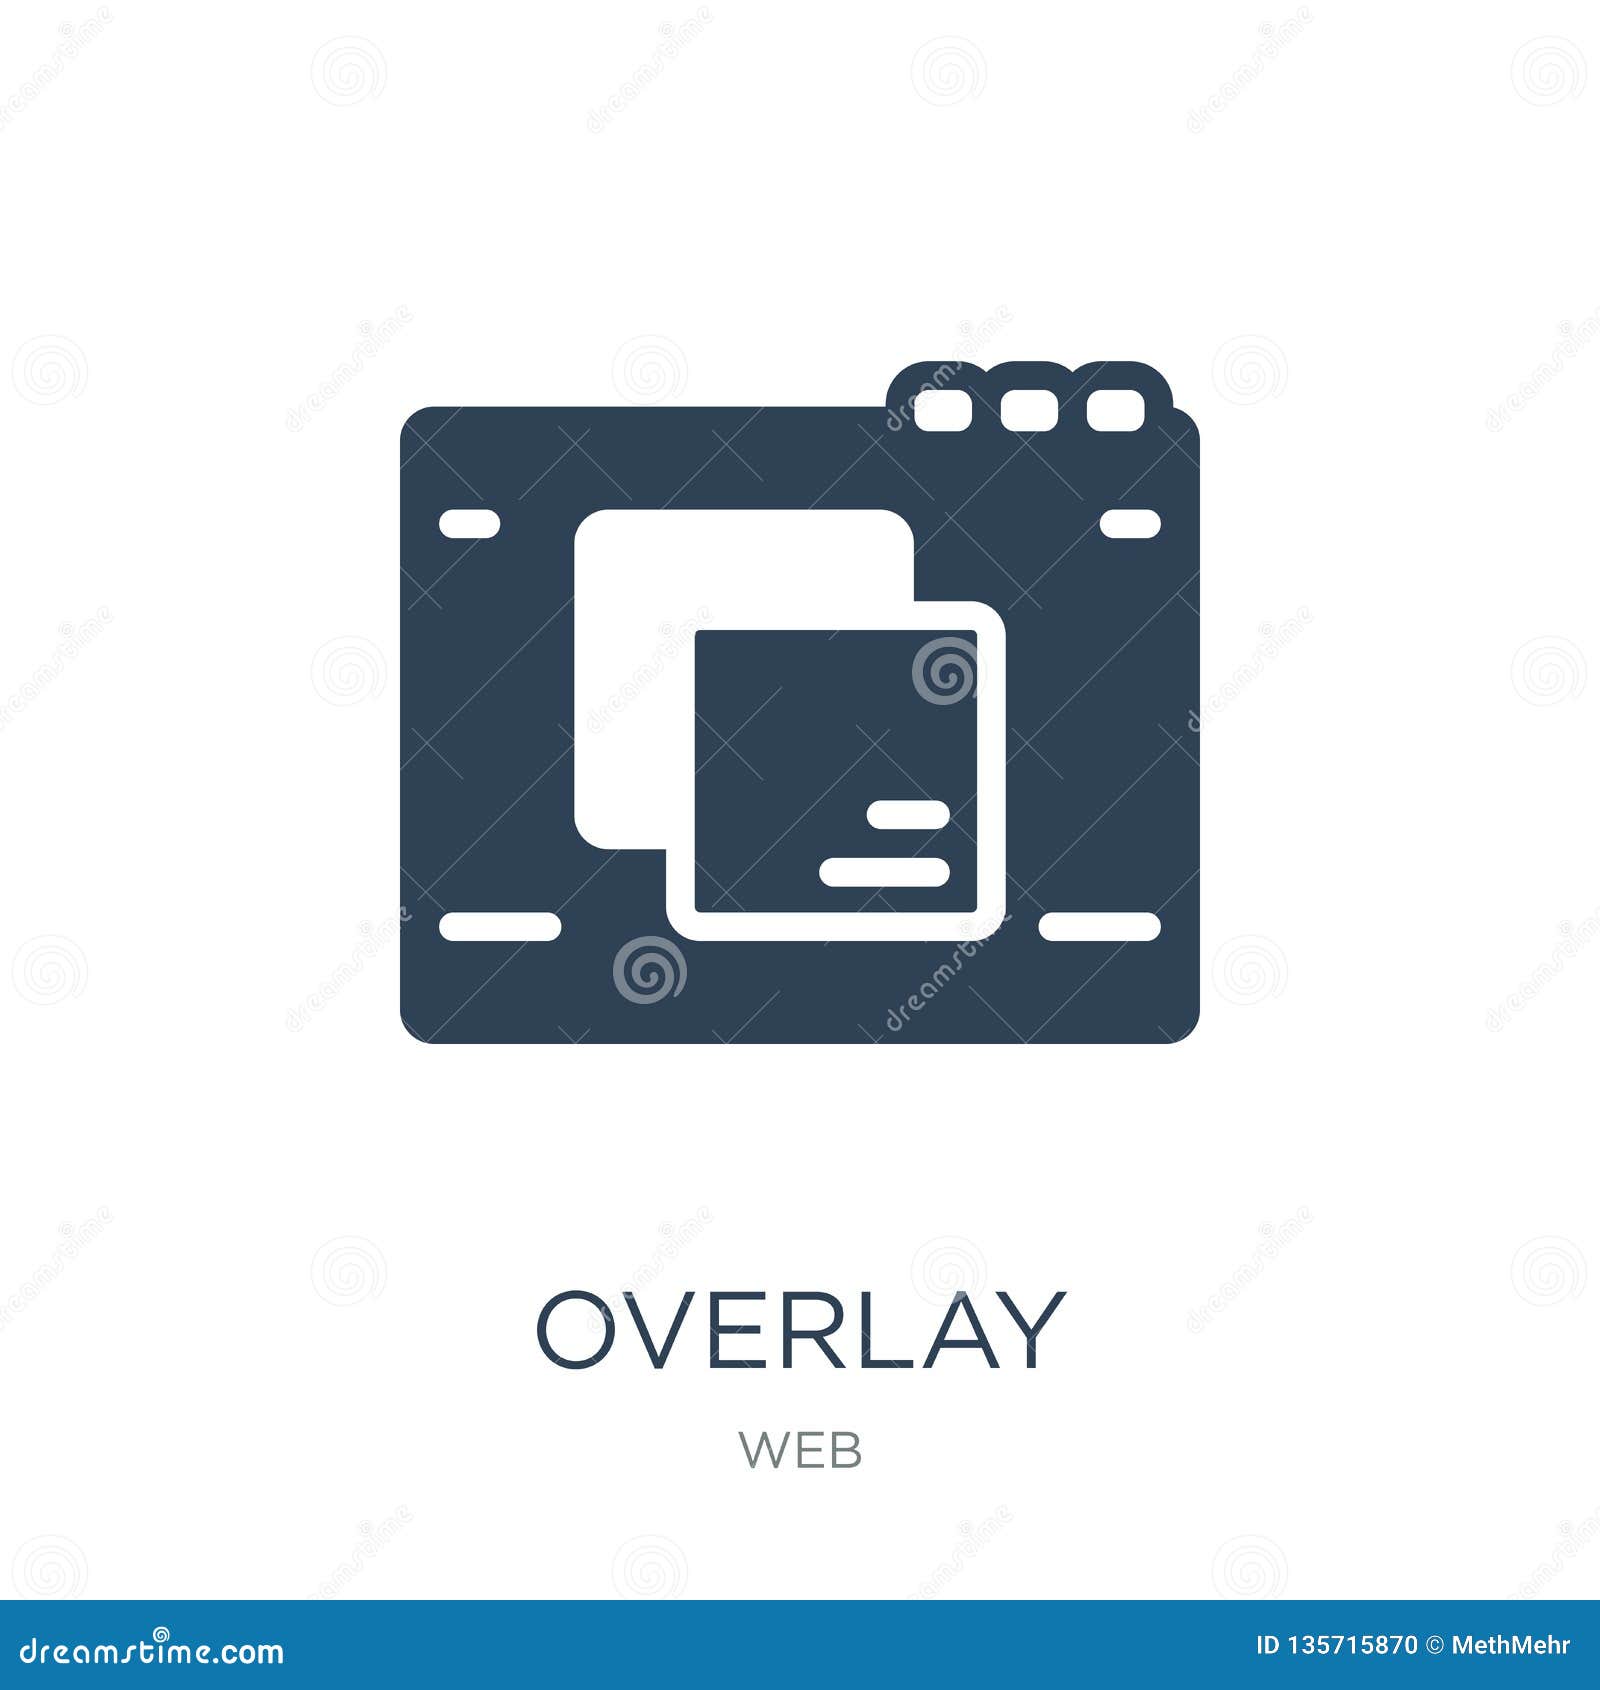  Overlay Icon  In Trendy Design Style Overlay Icon  Isolated 